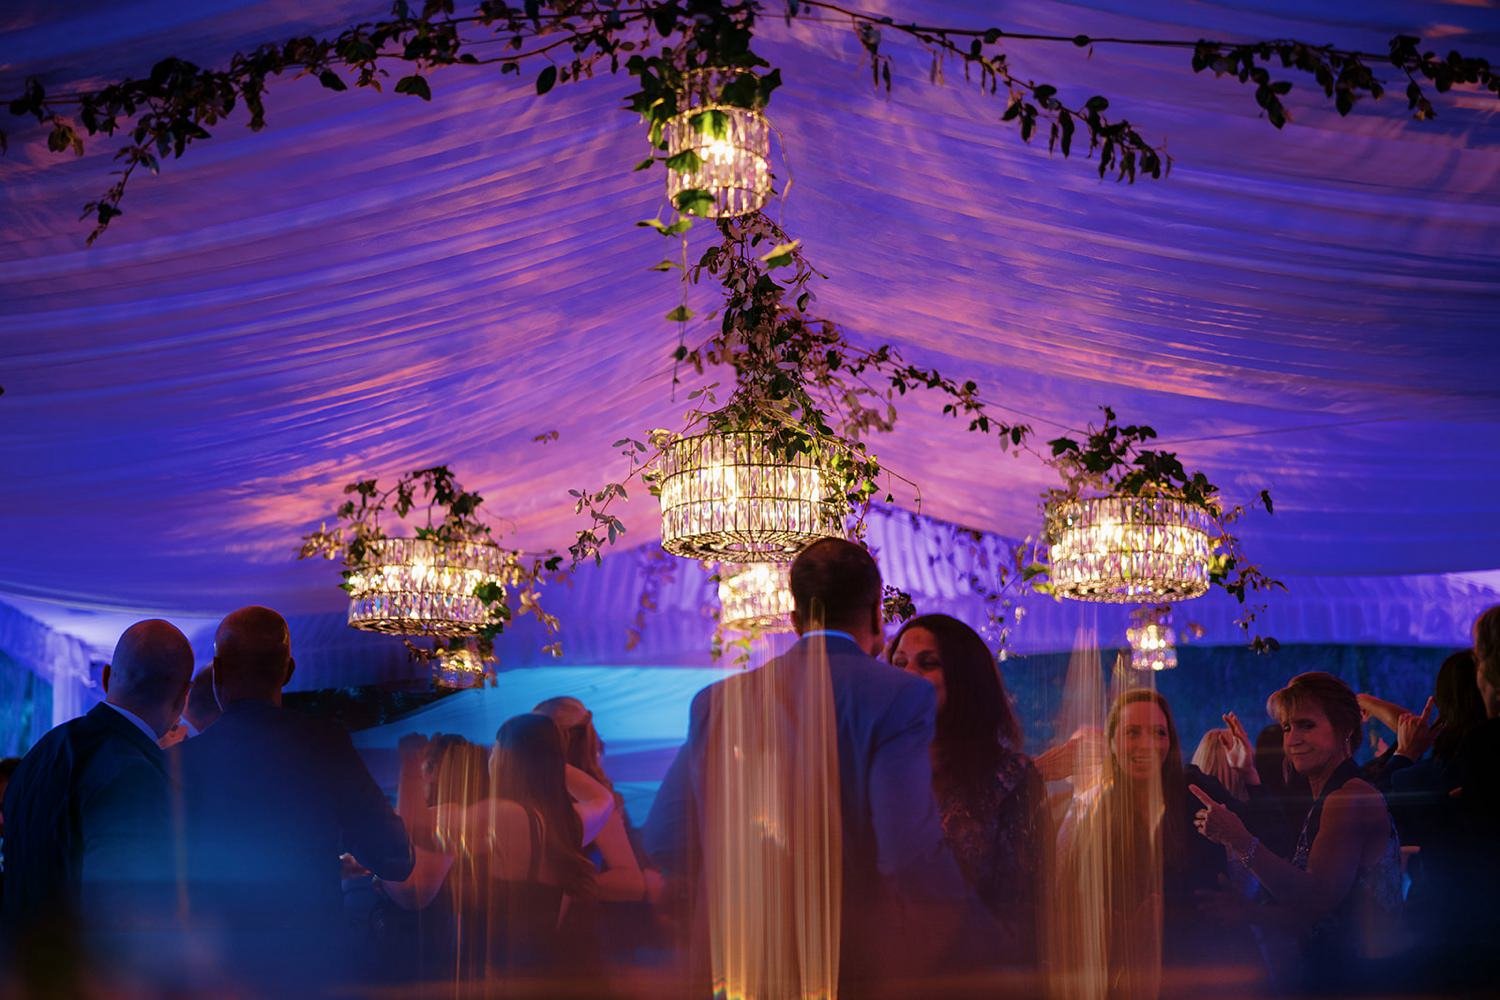 065_Admiral’s House wedding reception photo by Ryan Flynn Photography.jpg